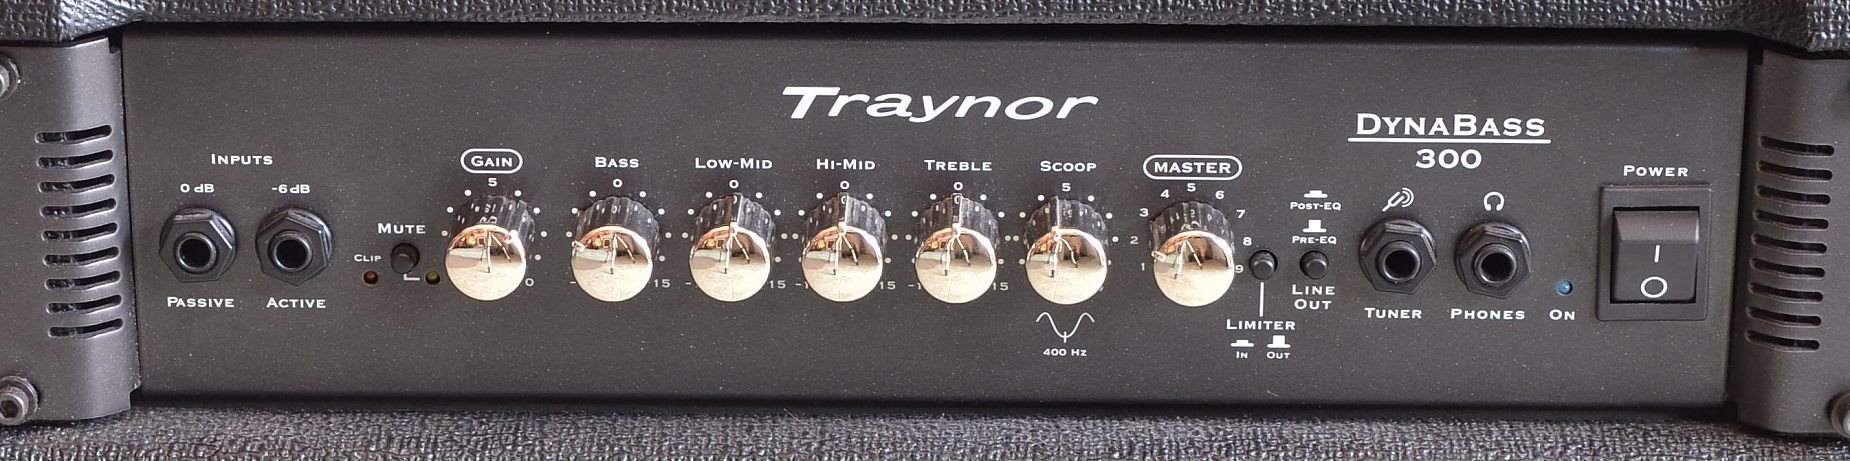 Traynor DB300 Bass Amp